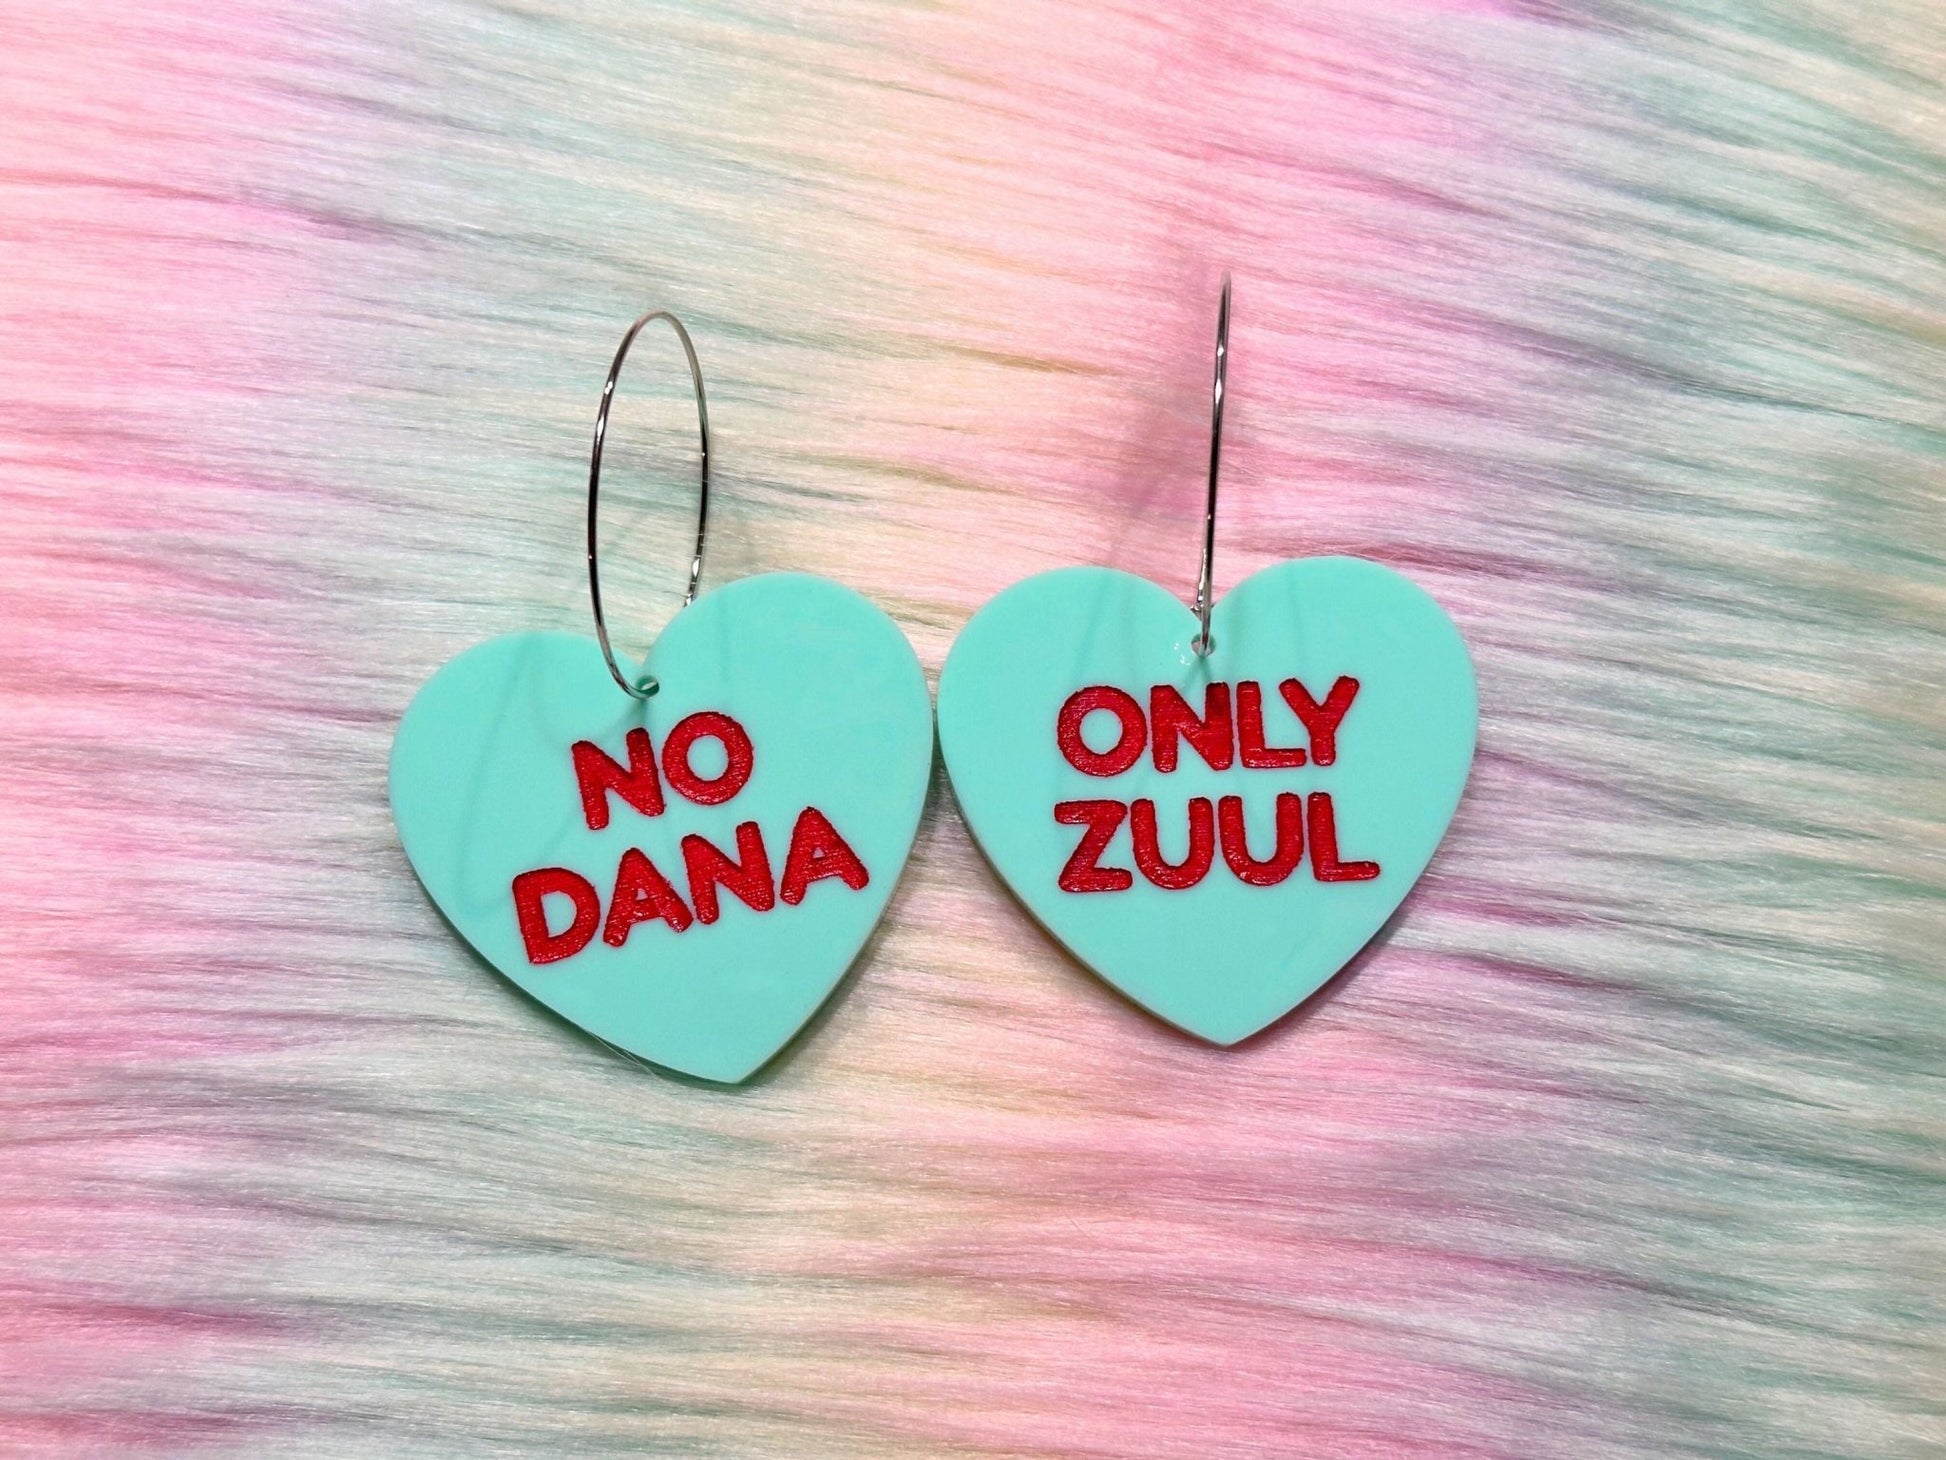 Nerdy Heart Earrings - "No Dana, Only Zuul" - Painted Raina